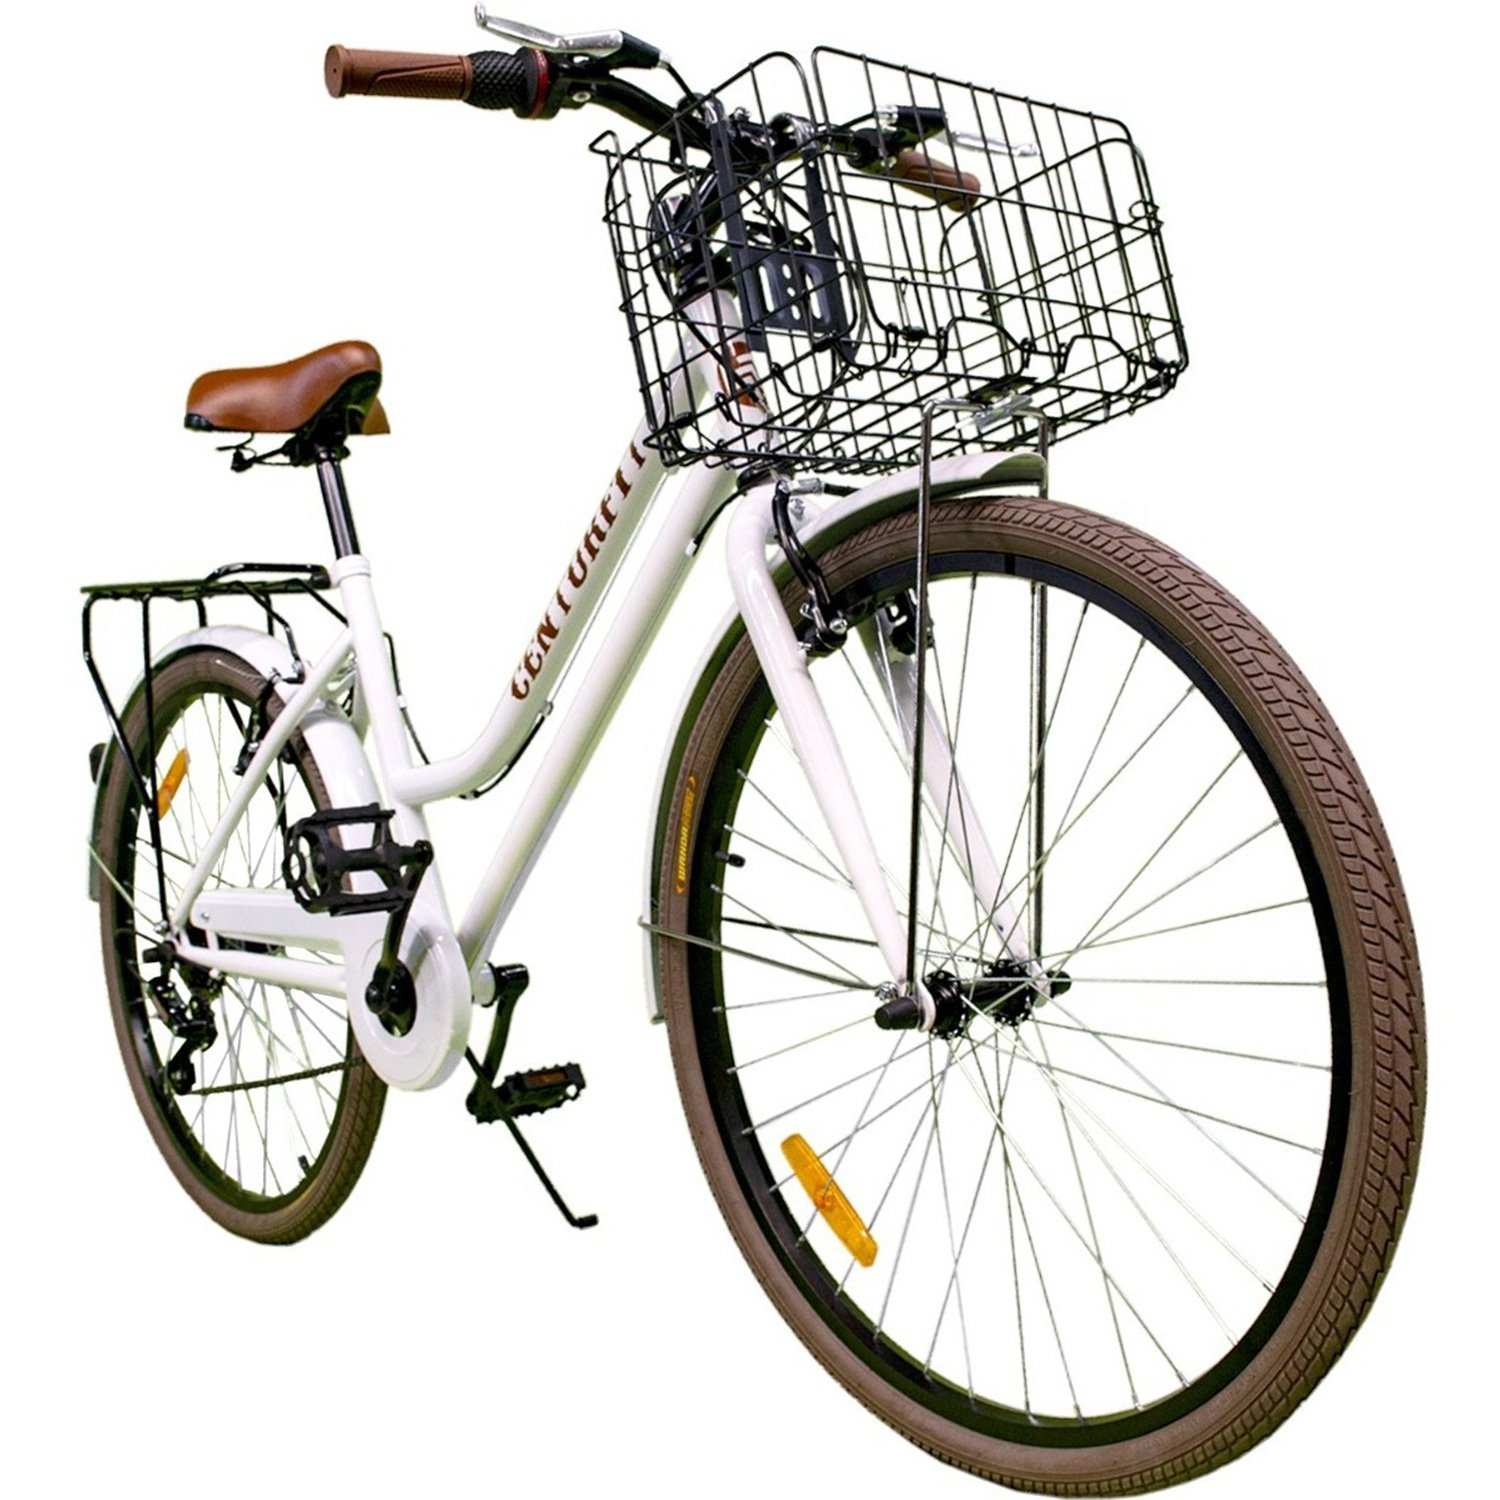 Bicicleta Vintage Retro R26 Clasica Urbana 6 Velocidades Canastilla Plegable Asiento Ajustable Frenos V.Break Blanca  Centurfit 